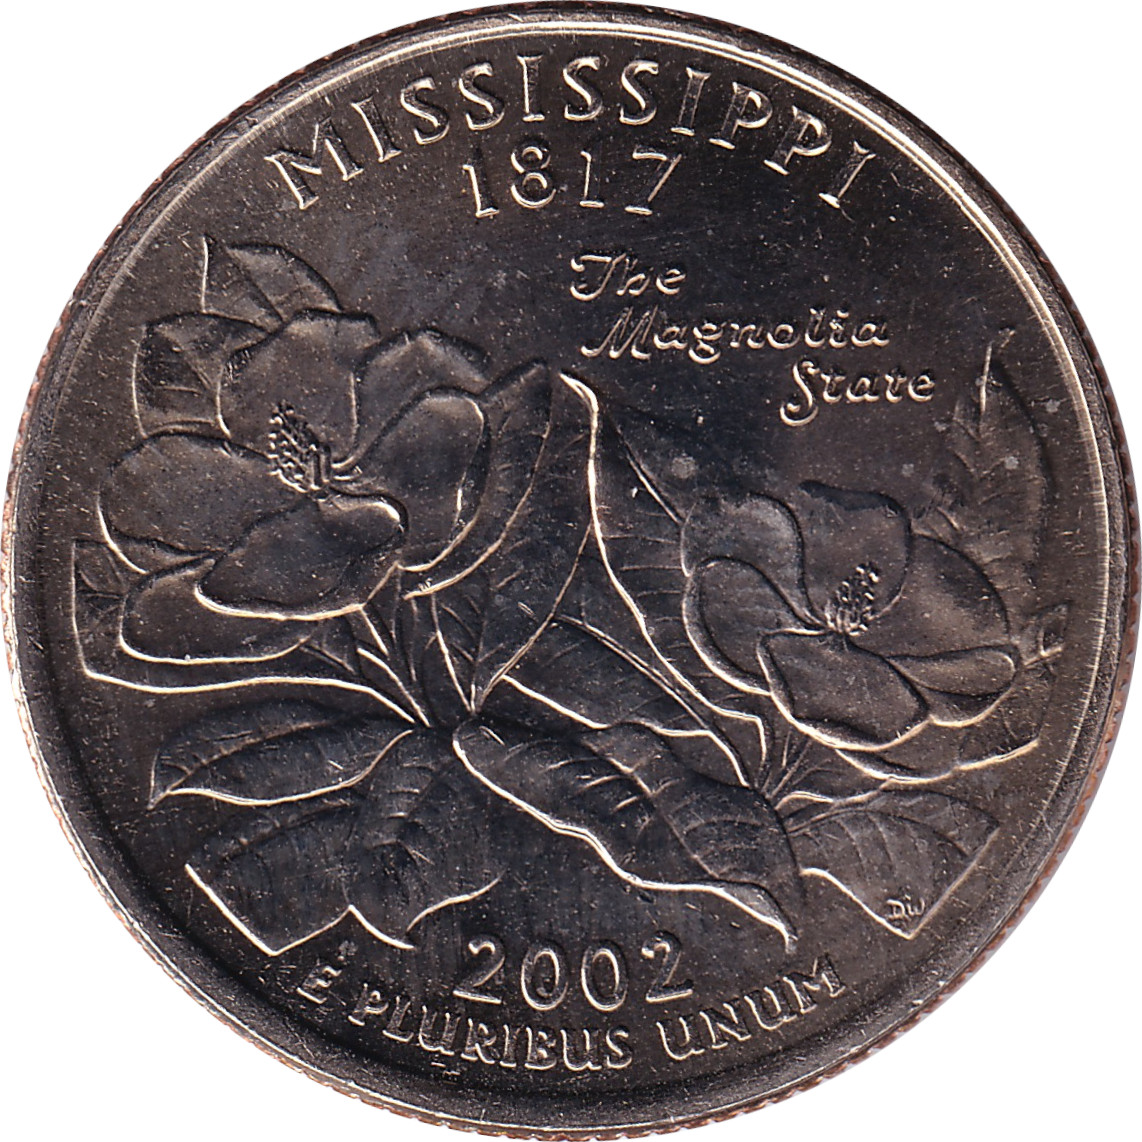 1/4 dollar - Mississippi